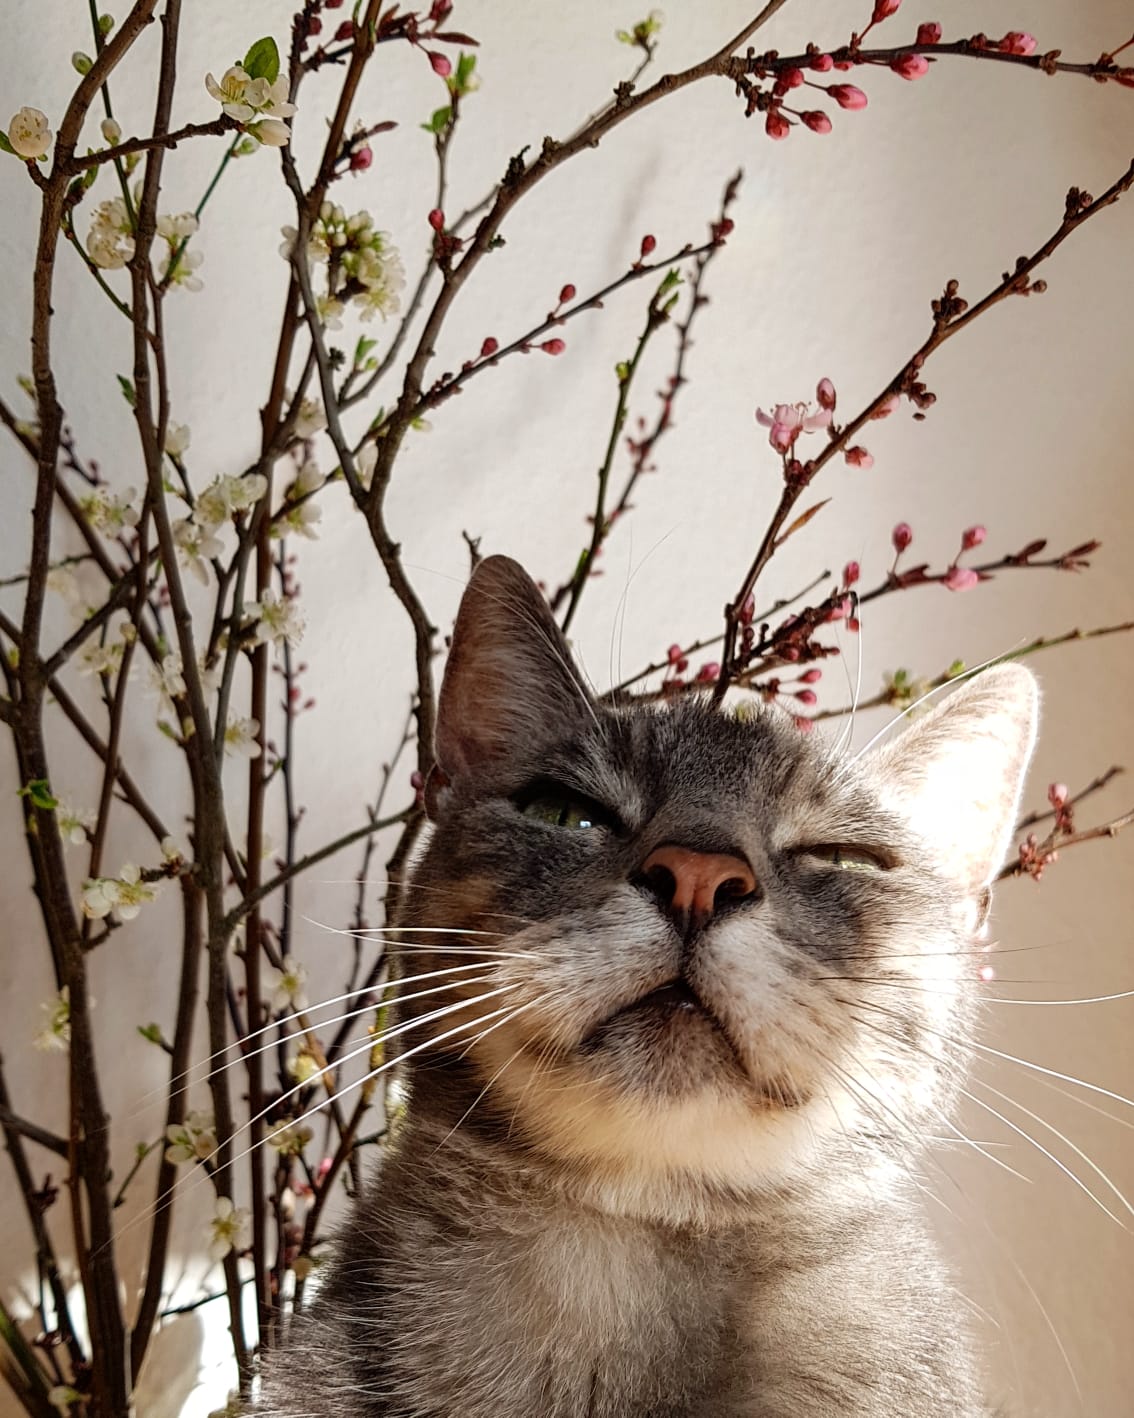 Otis the Cat #002 - Sunshine with flowers